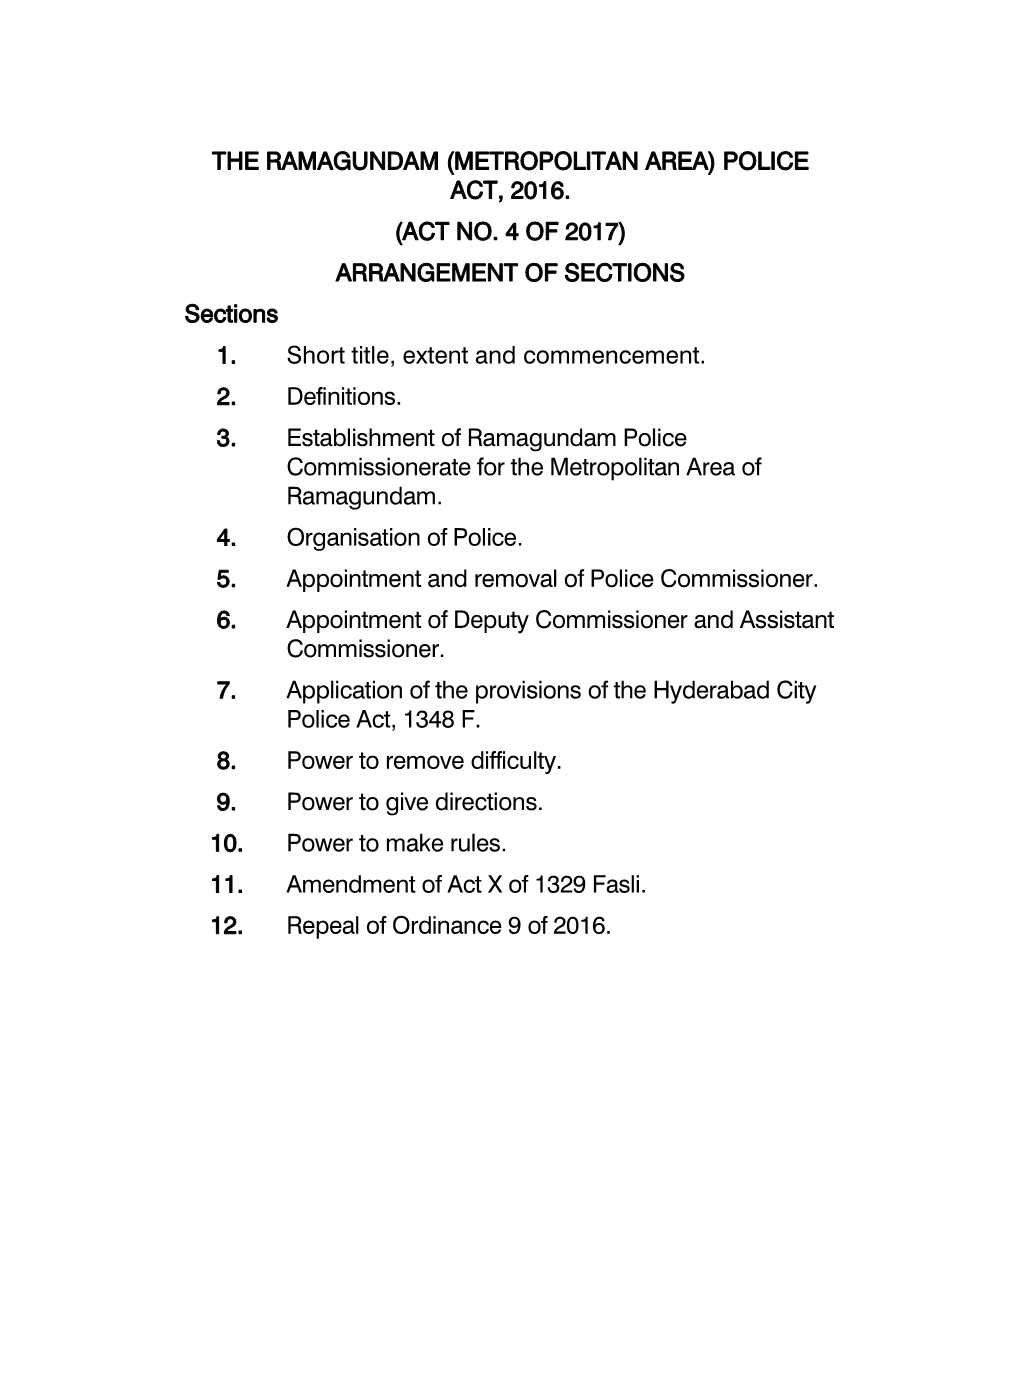 The Ramagundam (Metropolitan Area) Police Act, 2016